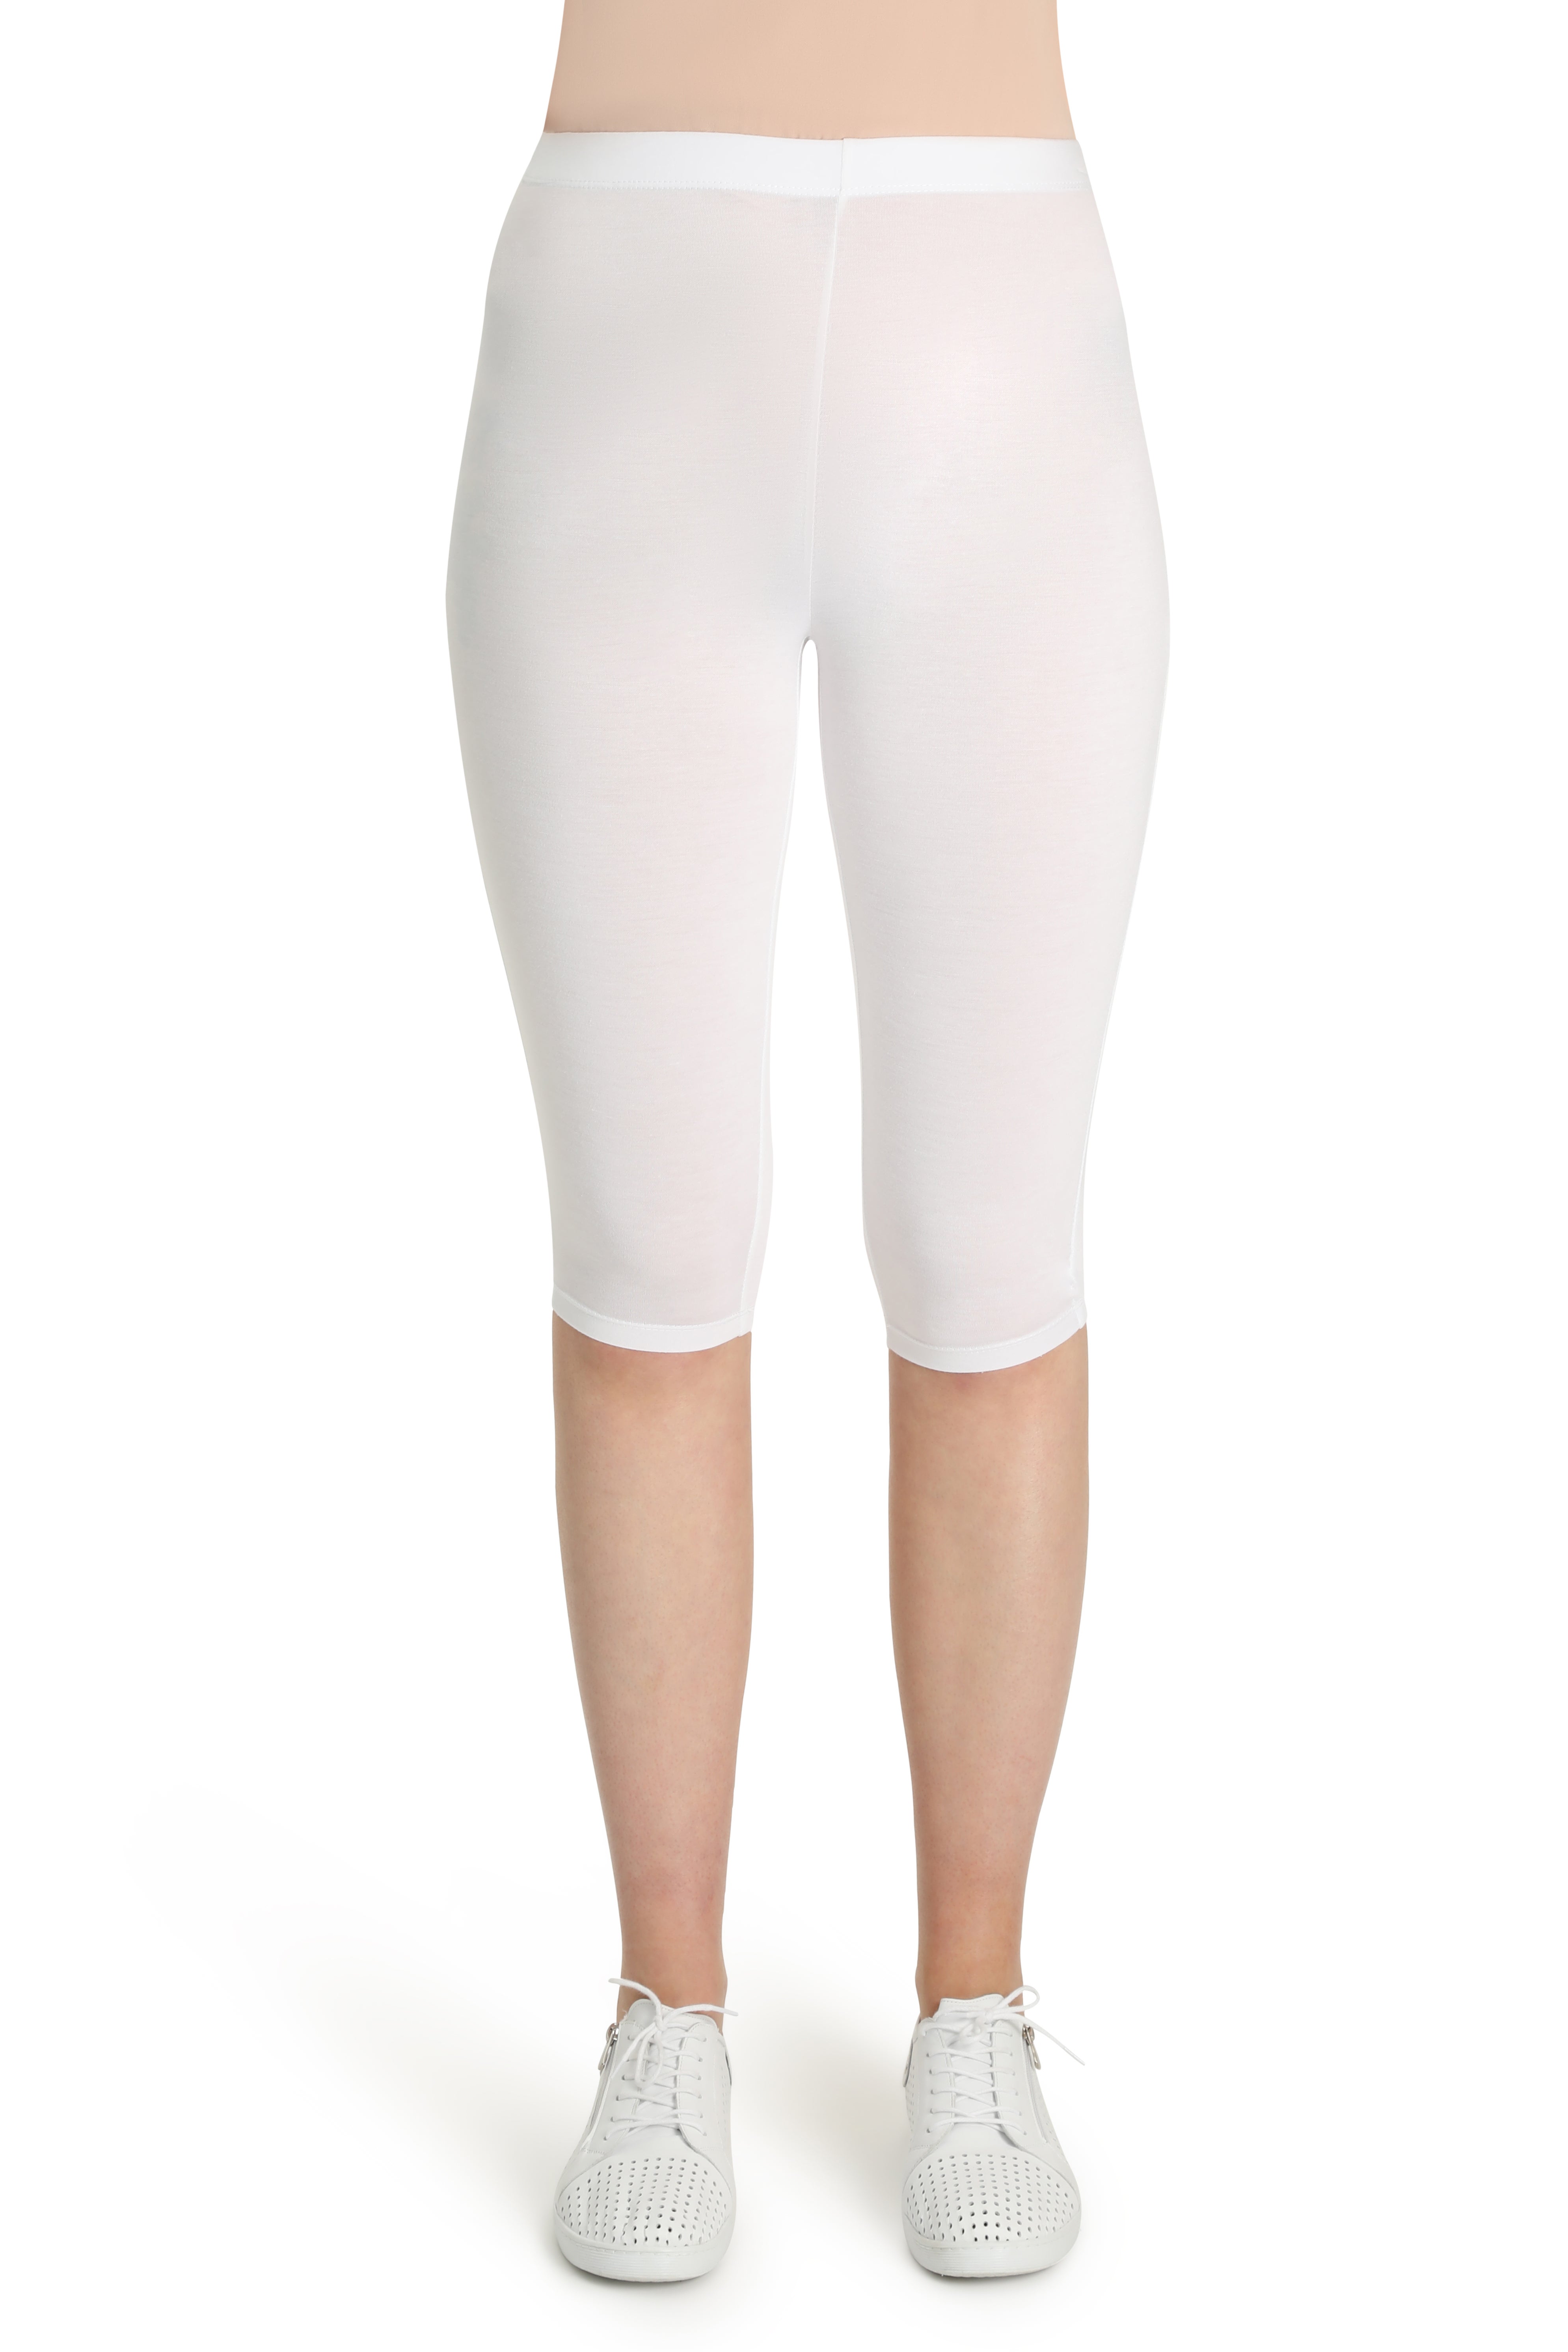 SMihono 4PC Women's Knee Length Leggings High Waist Full Length Long Pants  ed Yoga Workout Exercise Capris For Trendy Casual Summer With Pockets  Female Fashion Gray 12 - Walmart.com